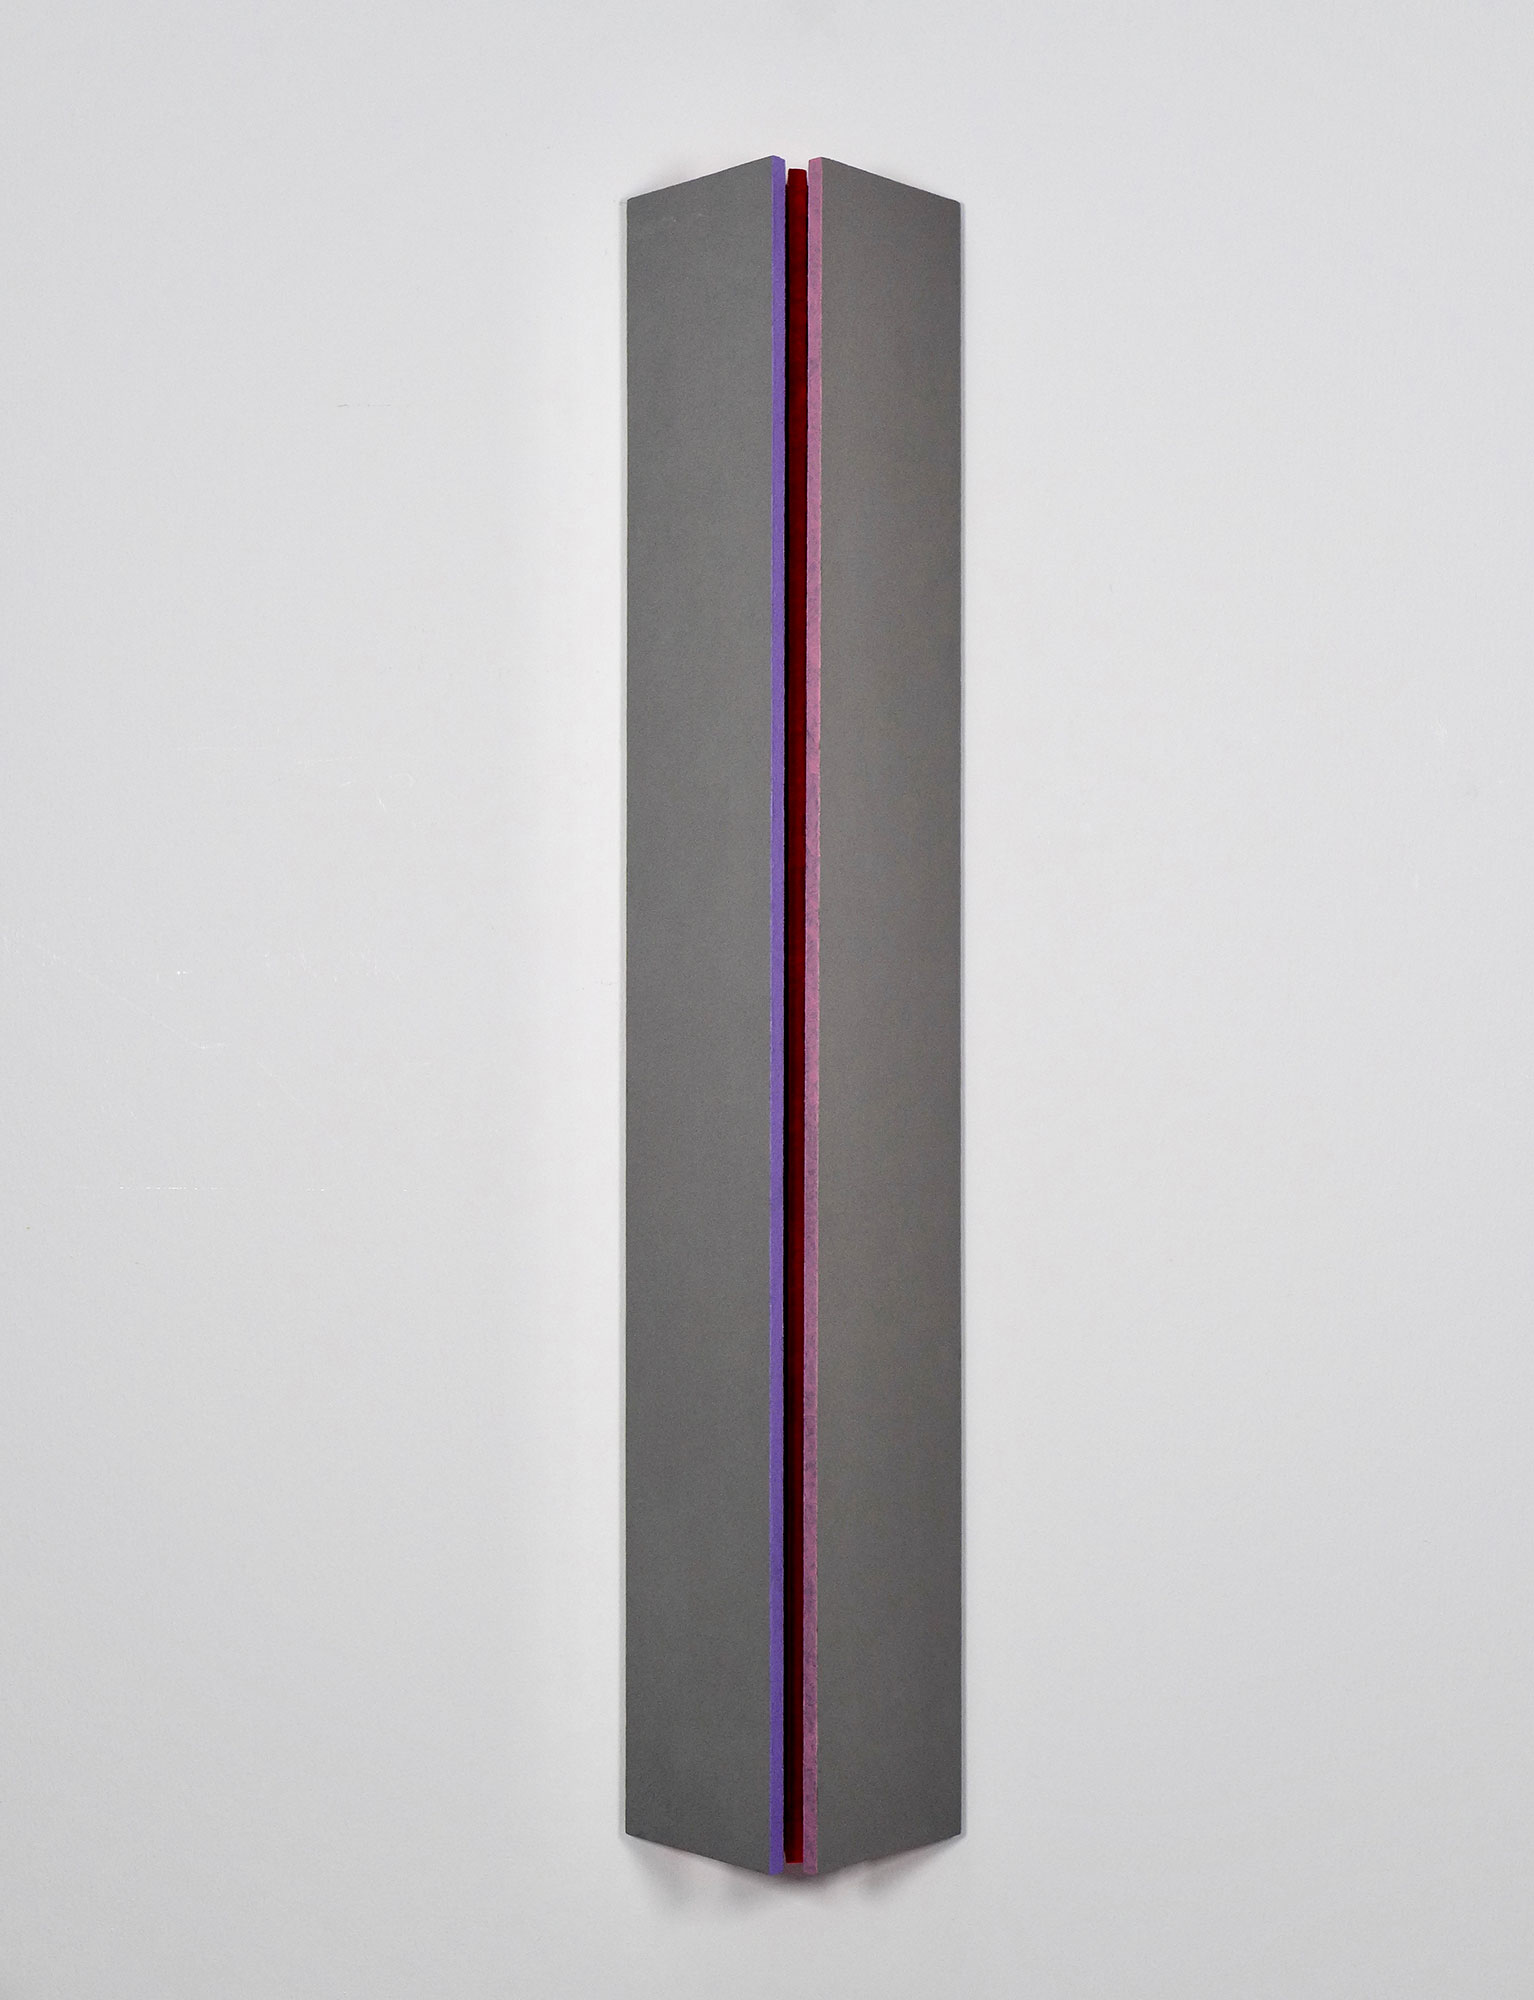 Kenneth Dingwall, Presence, 2019, acrylic on wood, 61cm x 2.5cm x 6cm